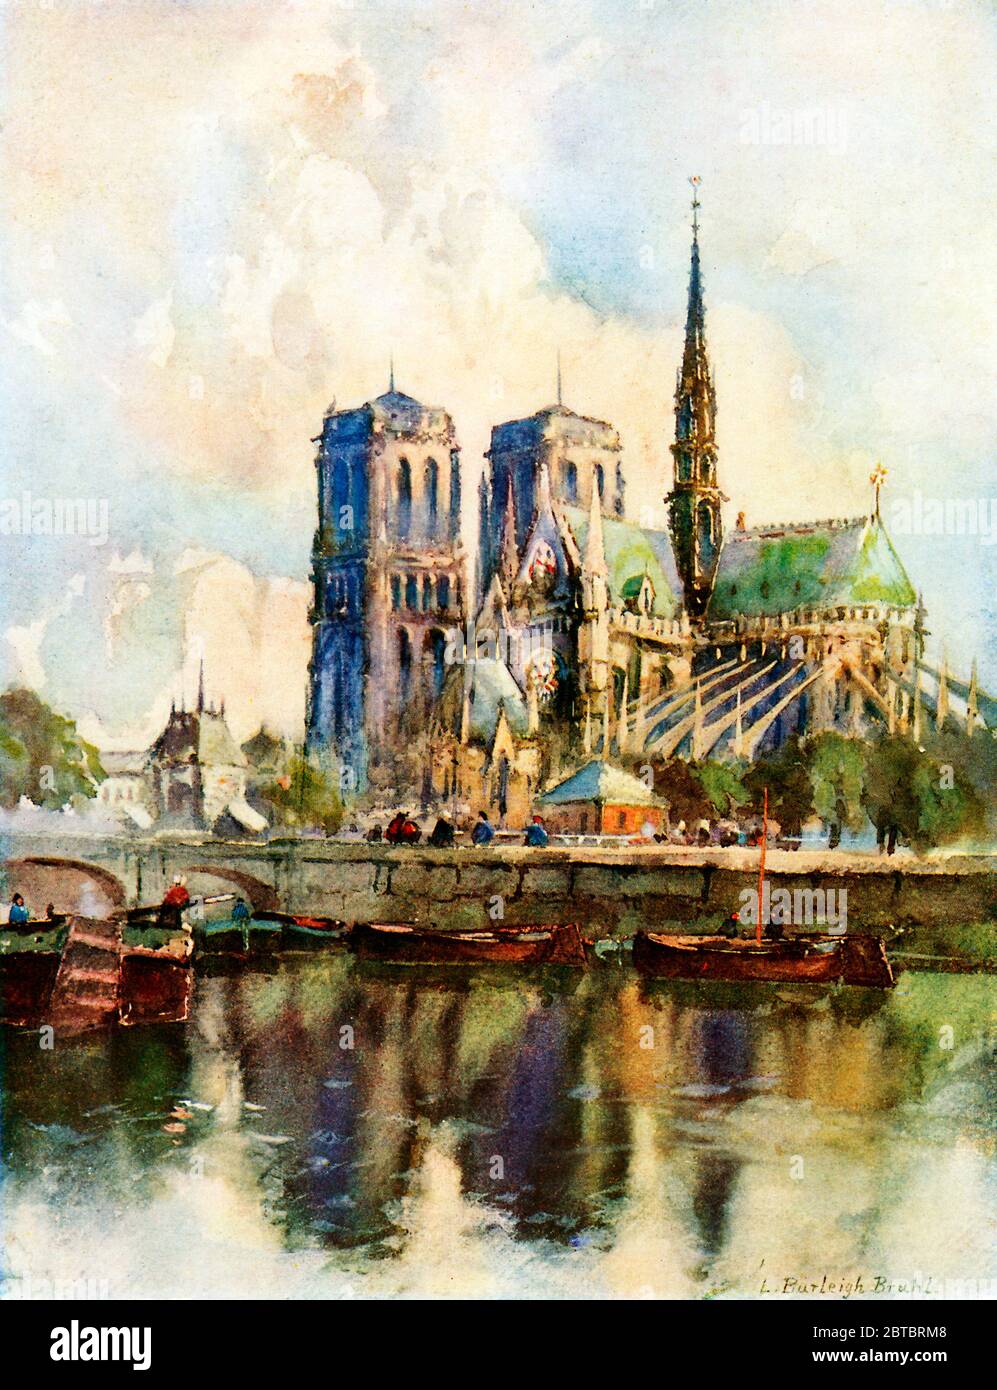 Notre Dame, Paris, 1917 watercolour by L Burleigh Bruhl of the iconic cathedral on the Ile de la Cité on the River Seine Stock Photo